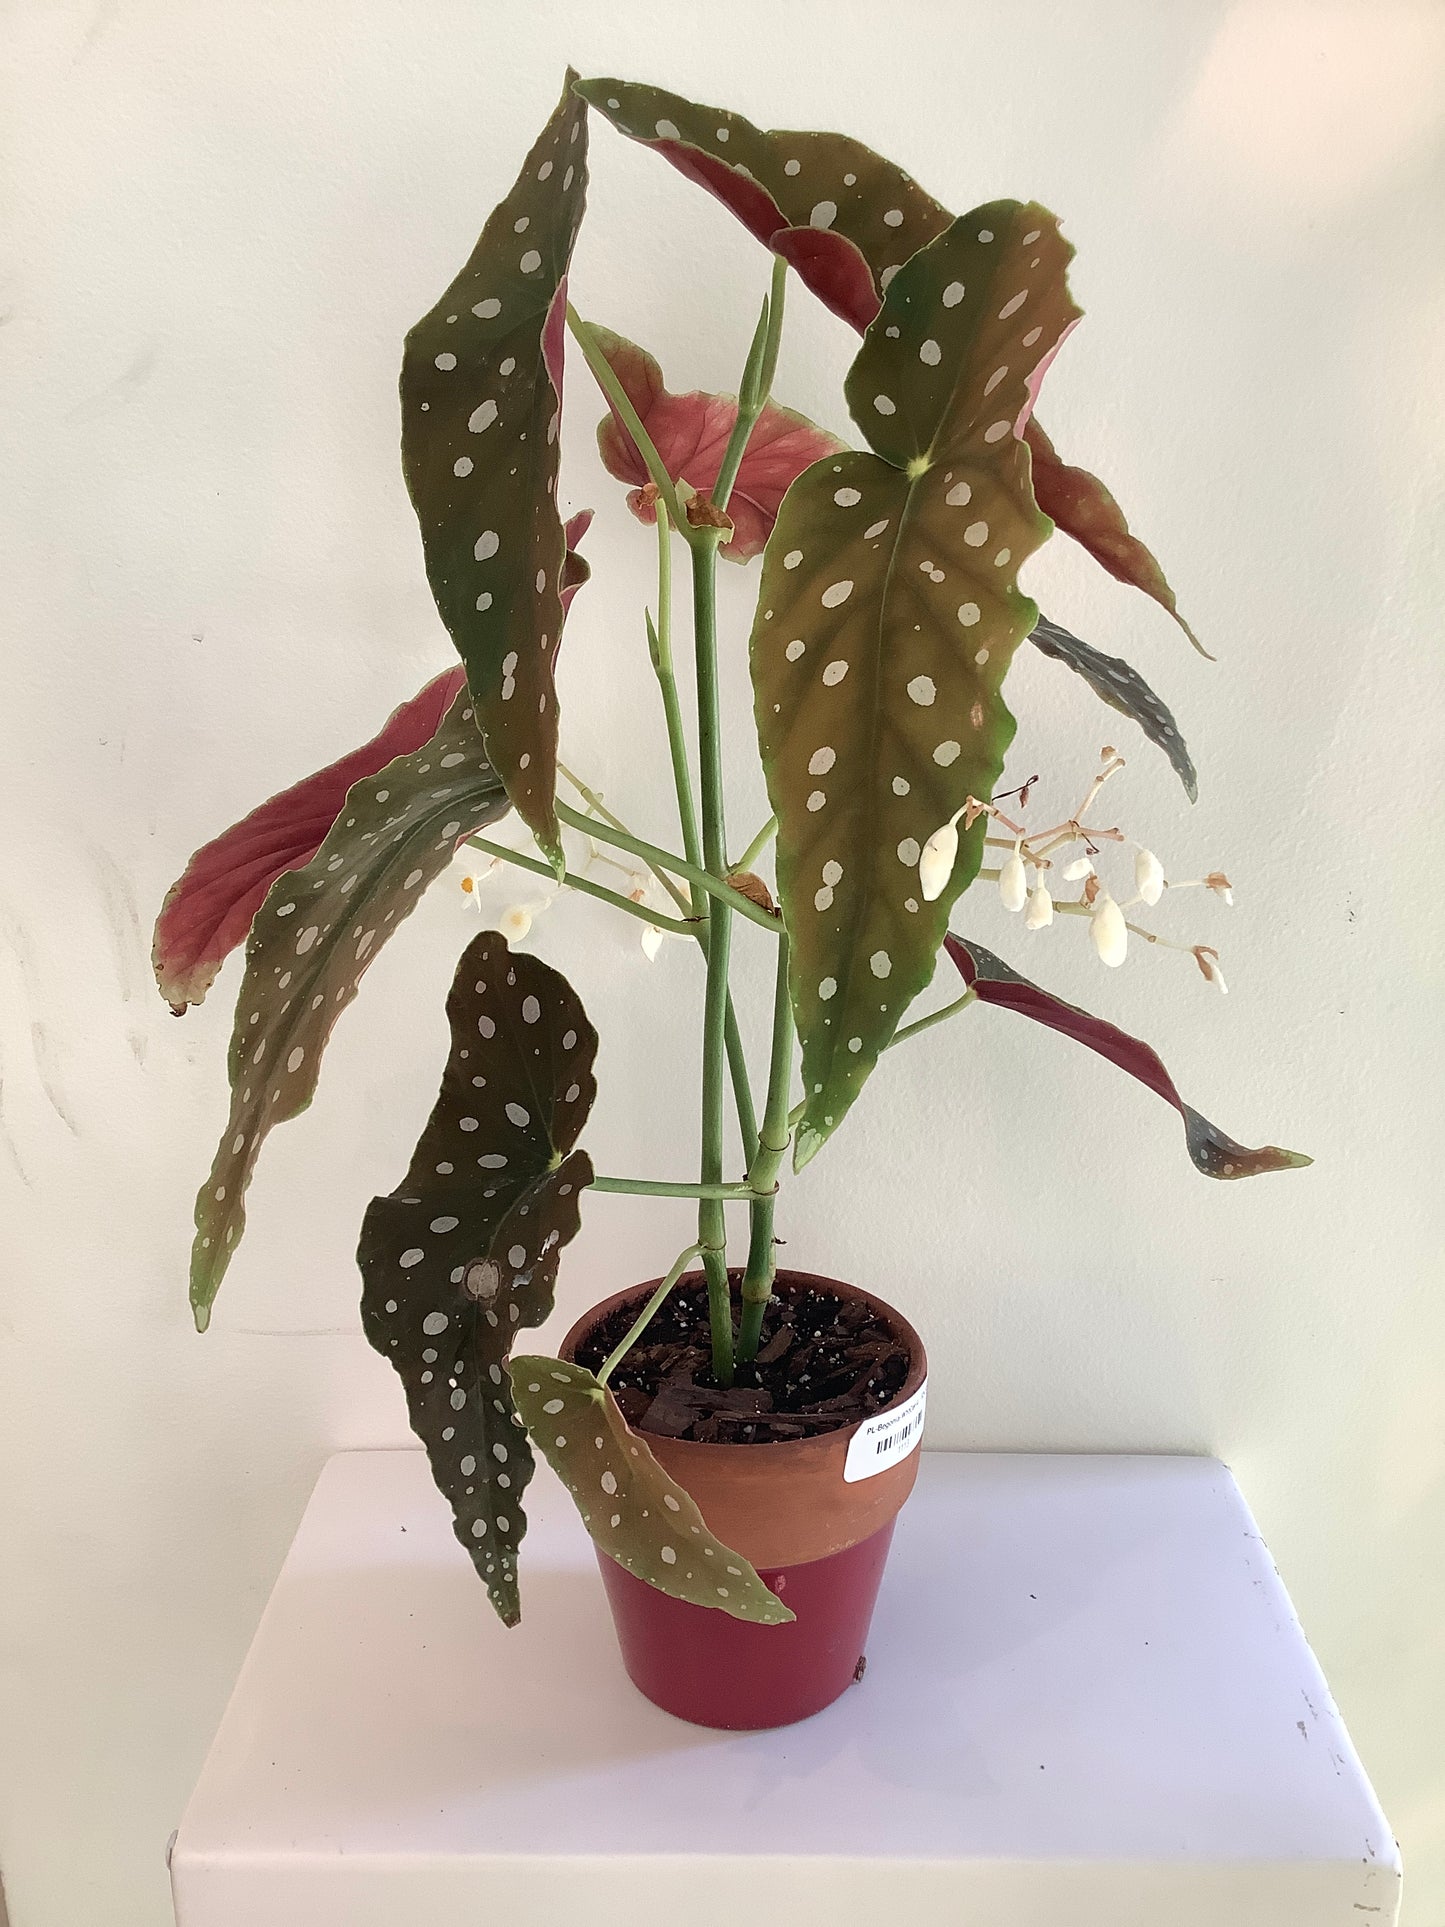 Begonia Maculata "Polka Dot" Plant - 4" Container